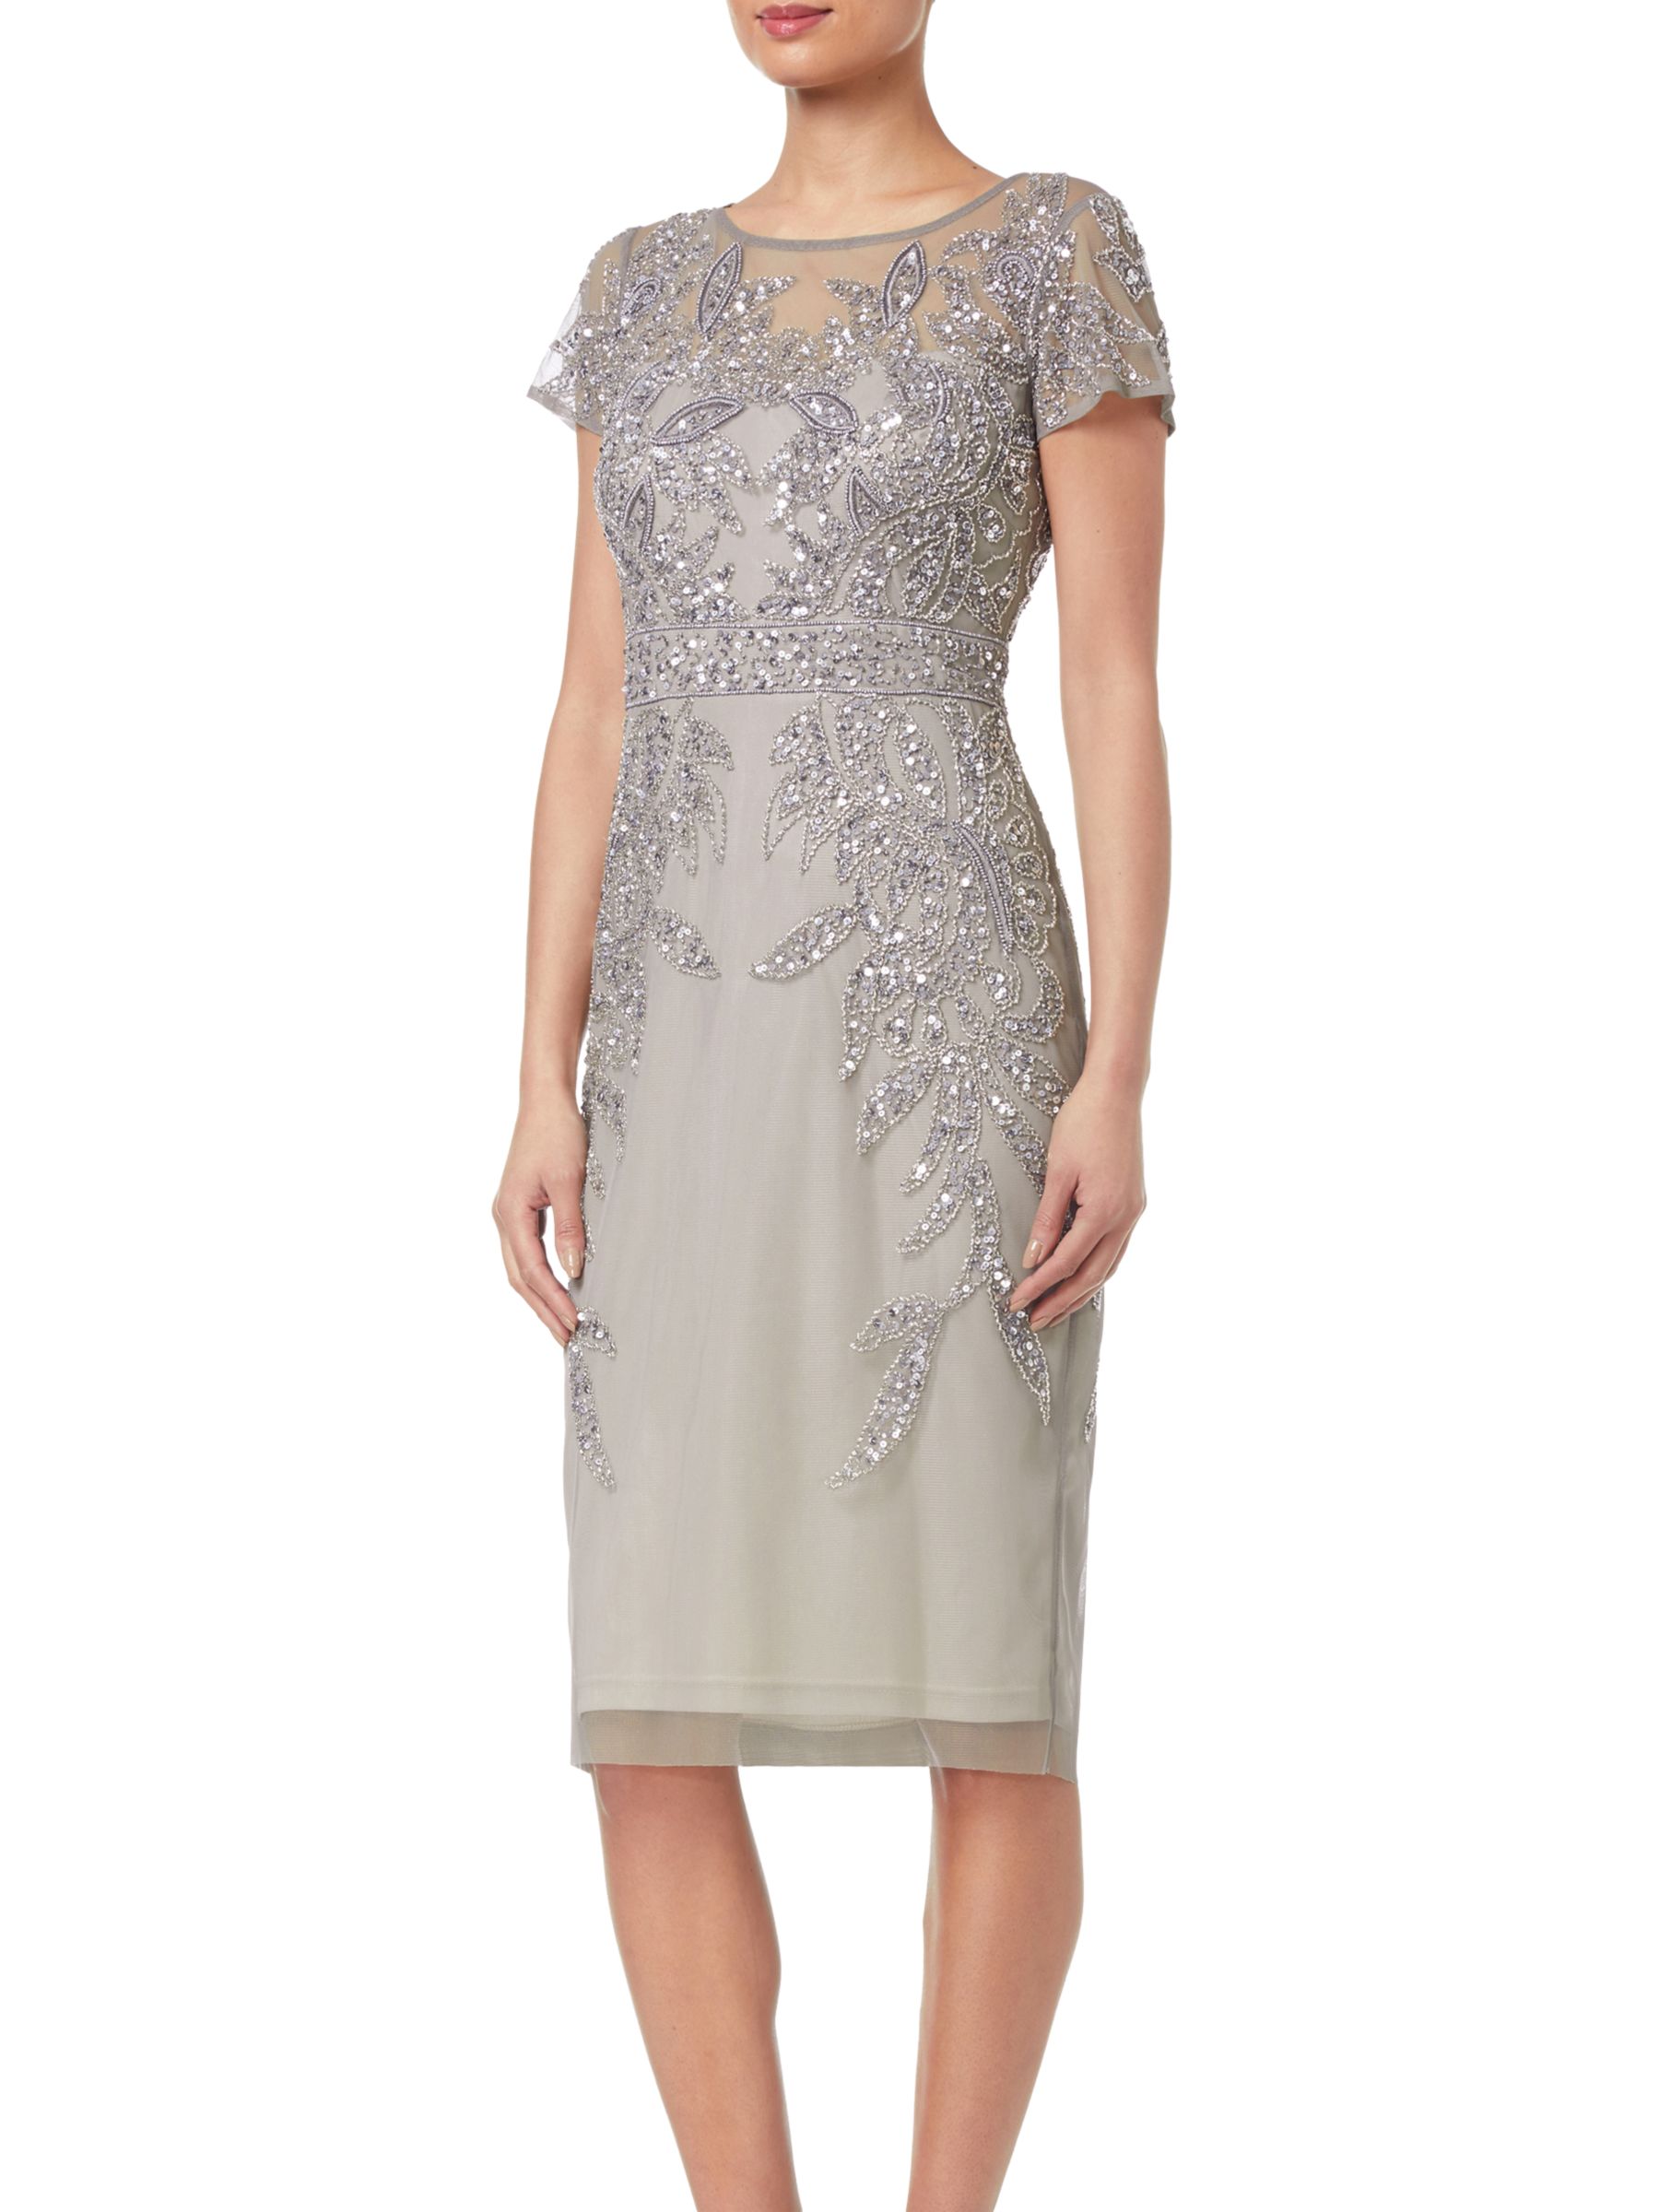 Adrianna Papell Short Sleeve Beaded Cocktail Dress, Platinum, 8